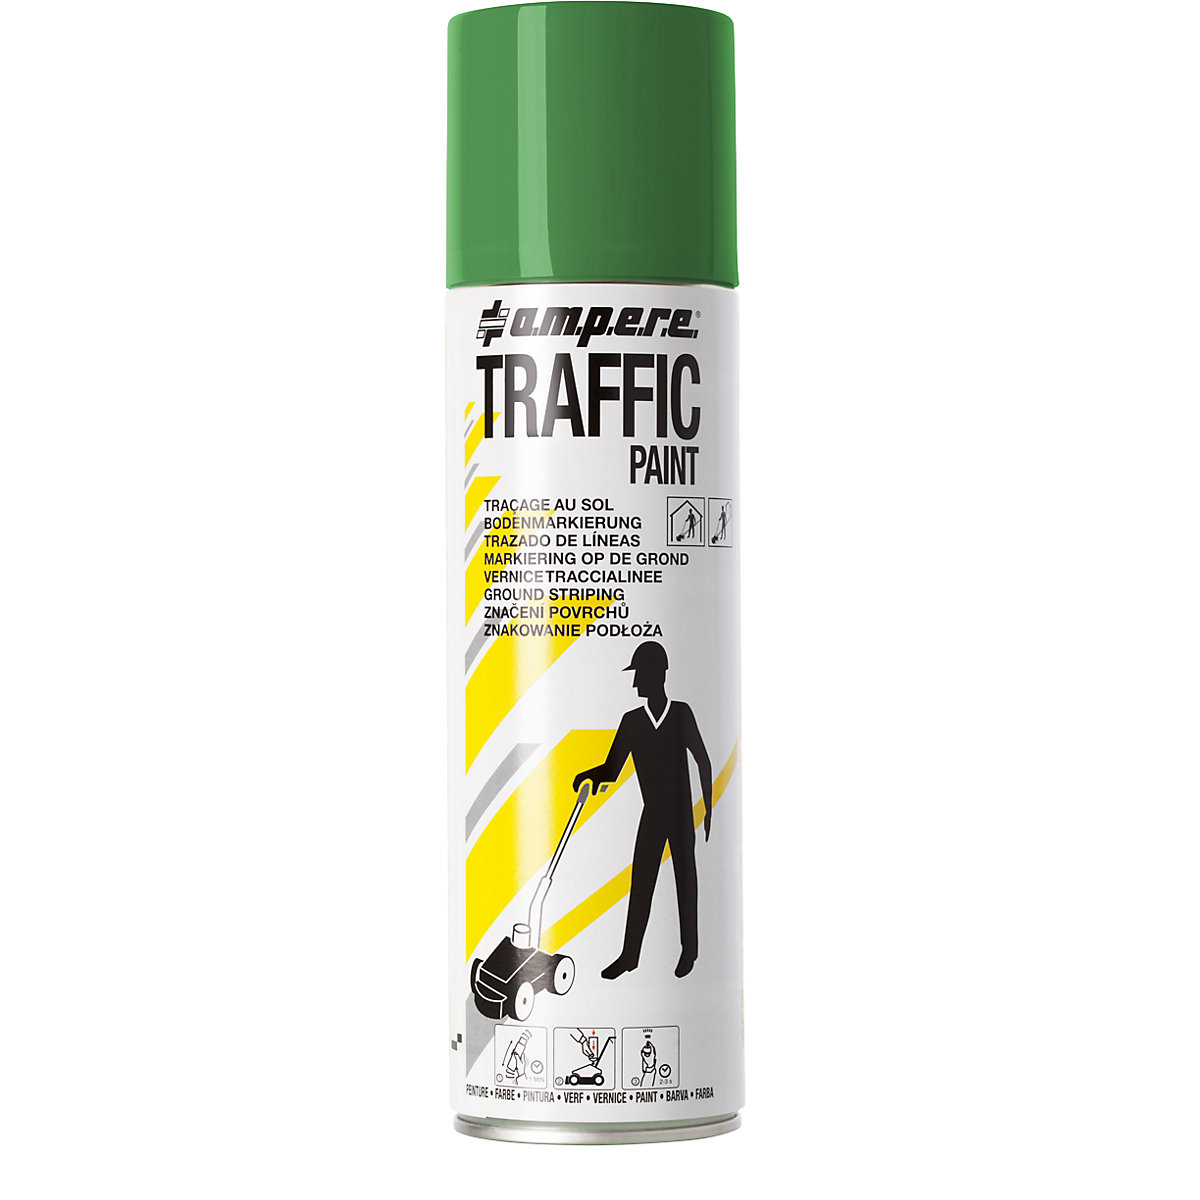 Tinta de marcação Traffic Paint® – Ampere, volume 500 ml, embalagem 12 latas, verde-2